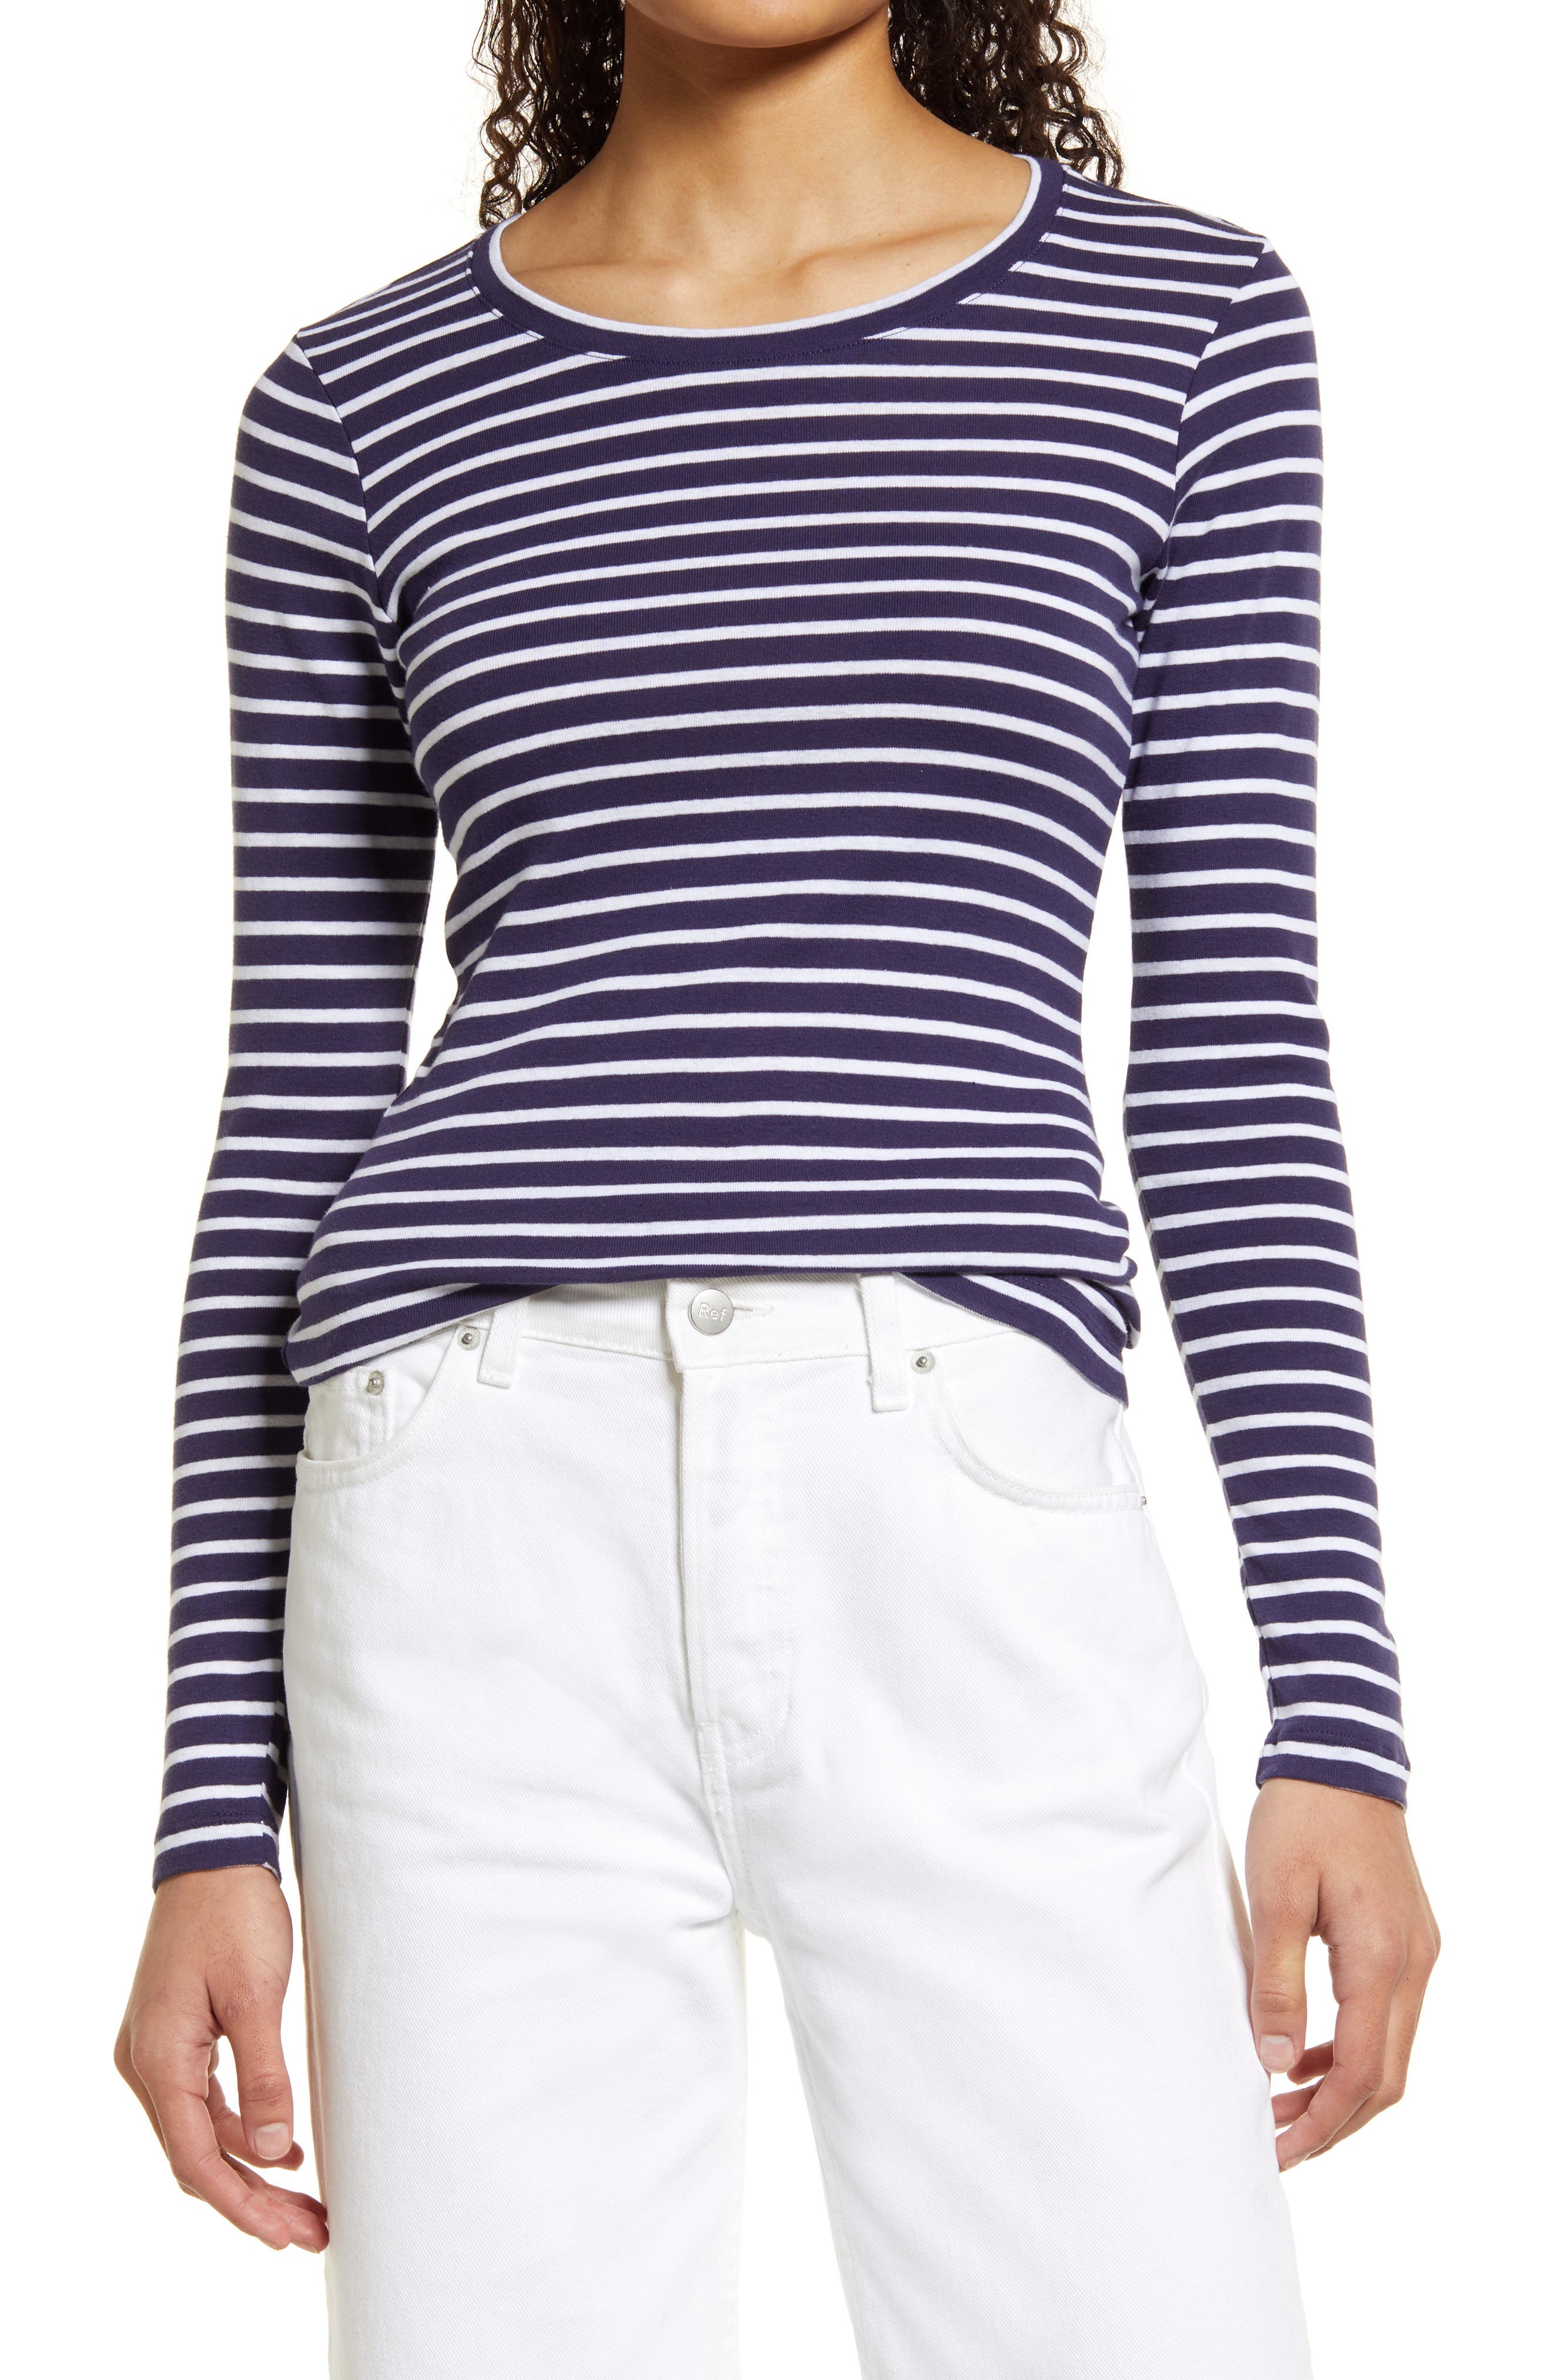 Women Round Neck Stripe Long Sleeve Sweatshirt Pullover Tops Blouse Jumper T Shirt Plain Vintage Ladies